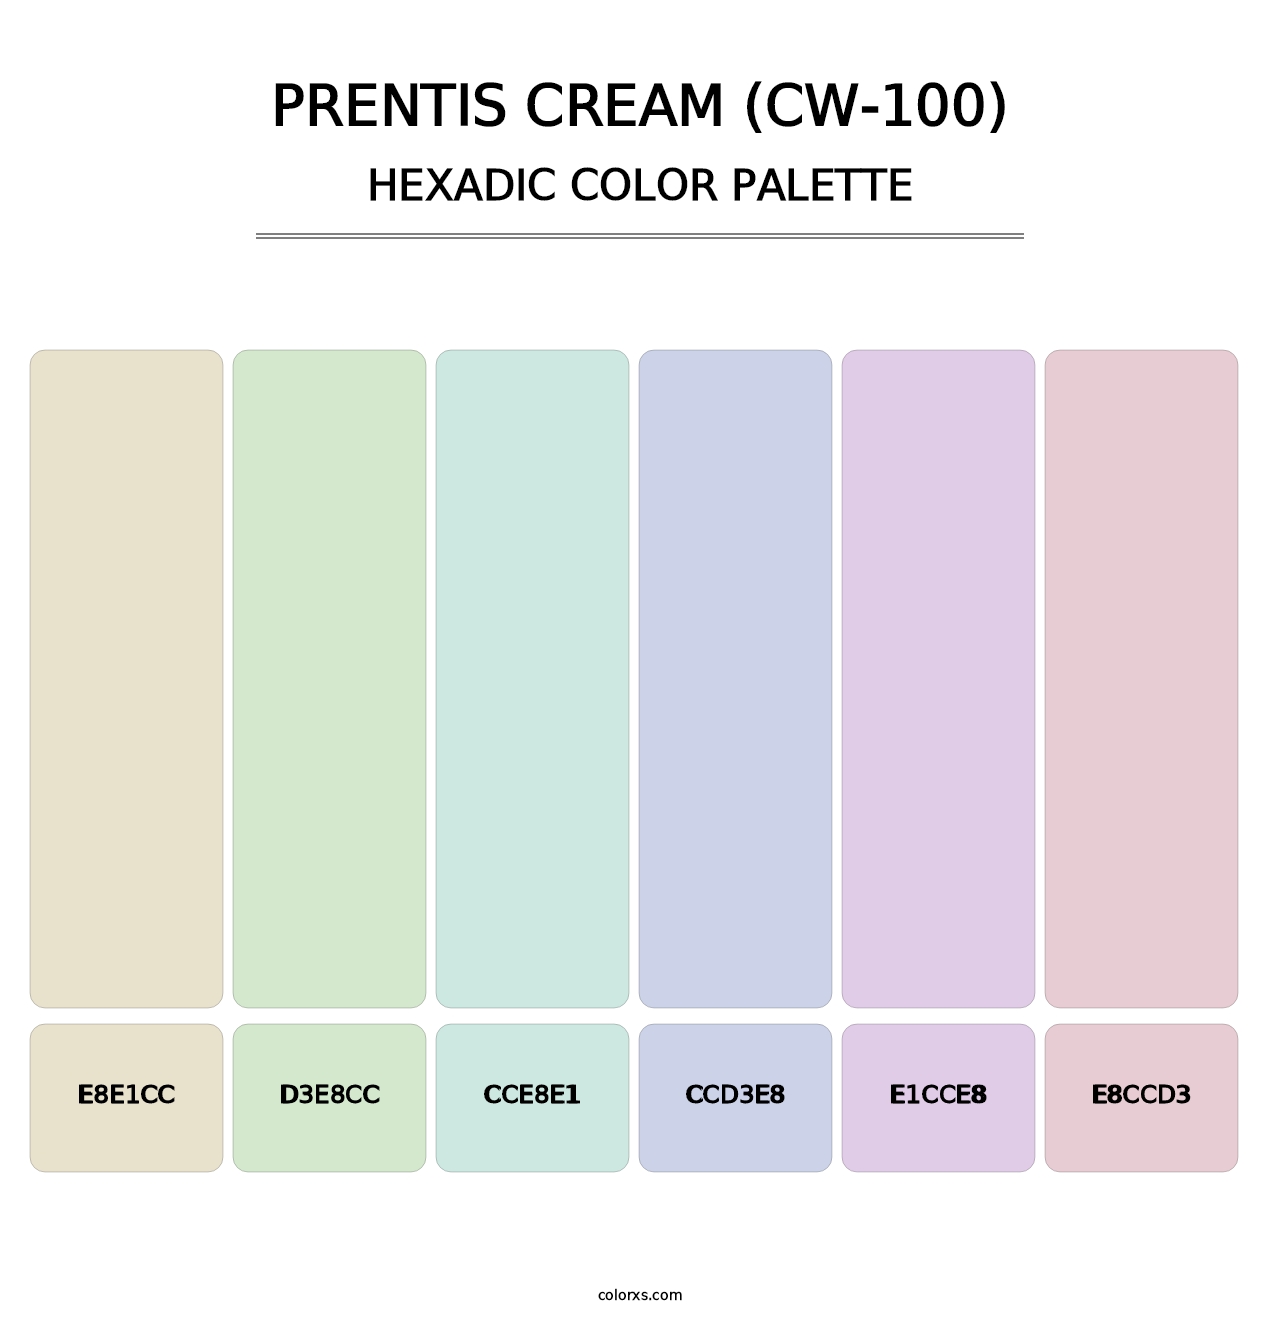 Prentis Cream (CW-100) - Hexadic Color Palette